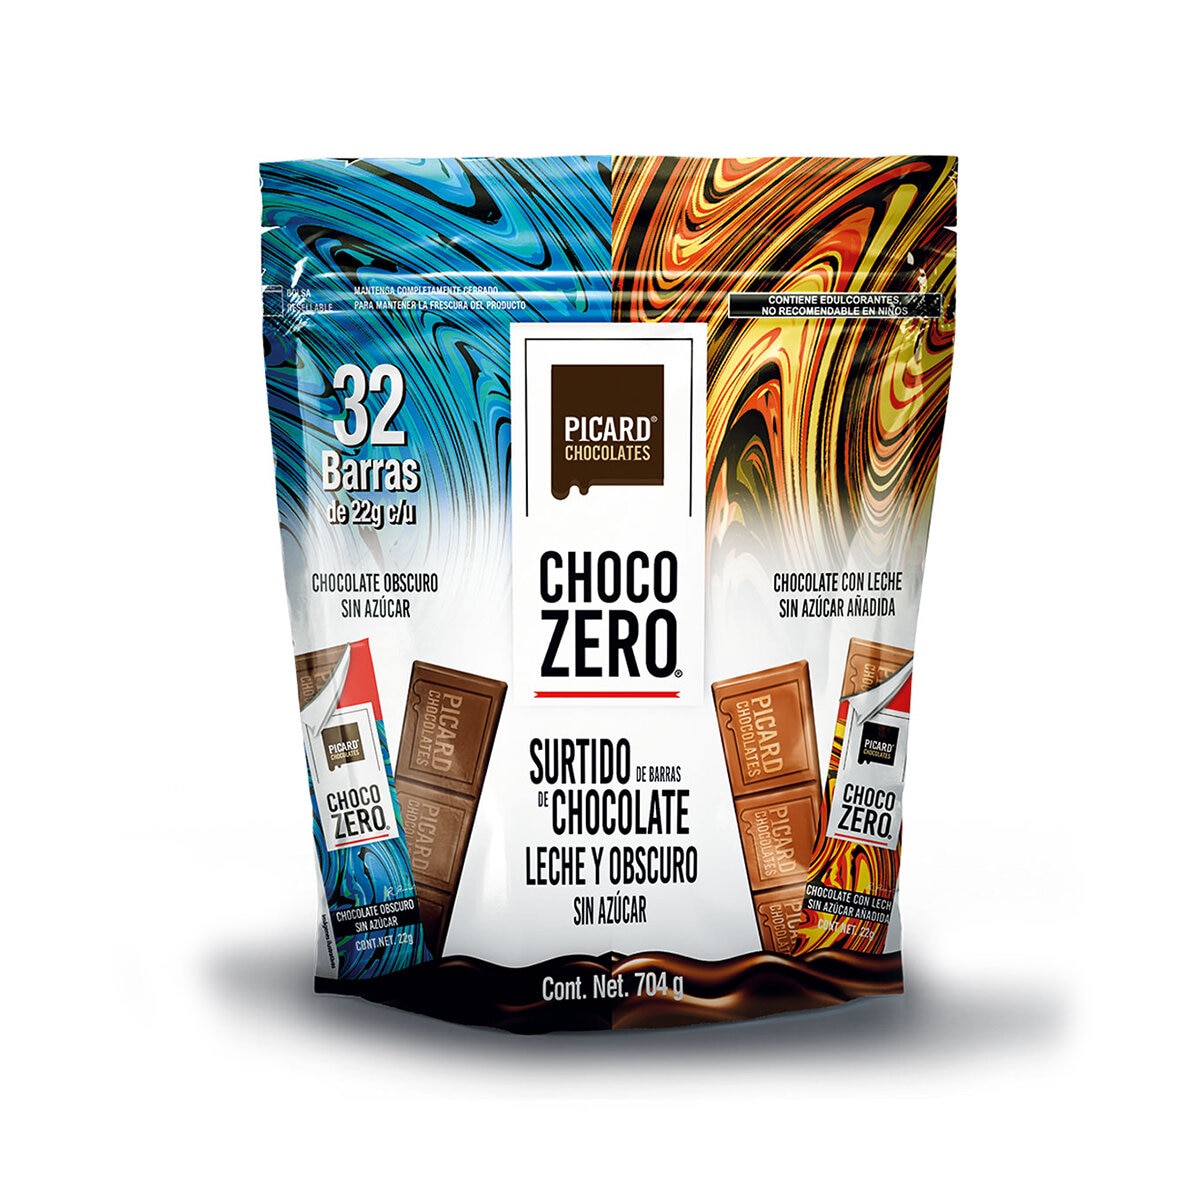 Picard Chocozero Surtido de Barras de Chocolate sin Azúcar 32 pzas de 22 g